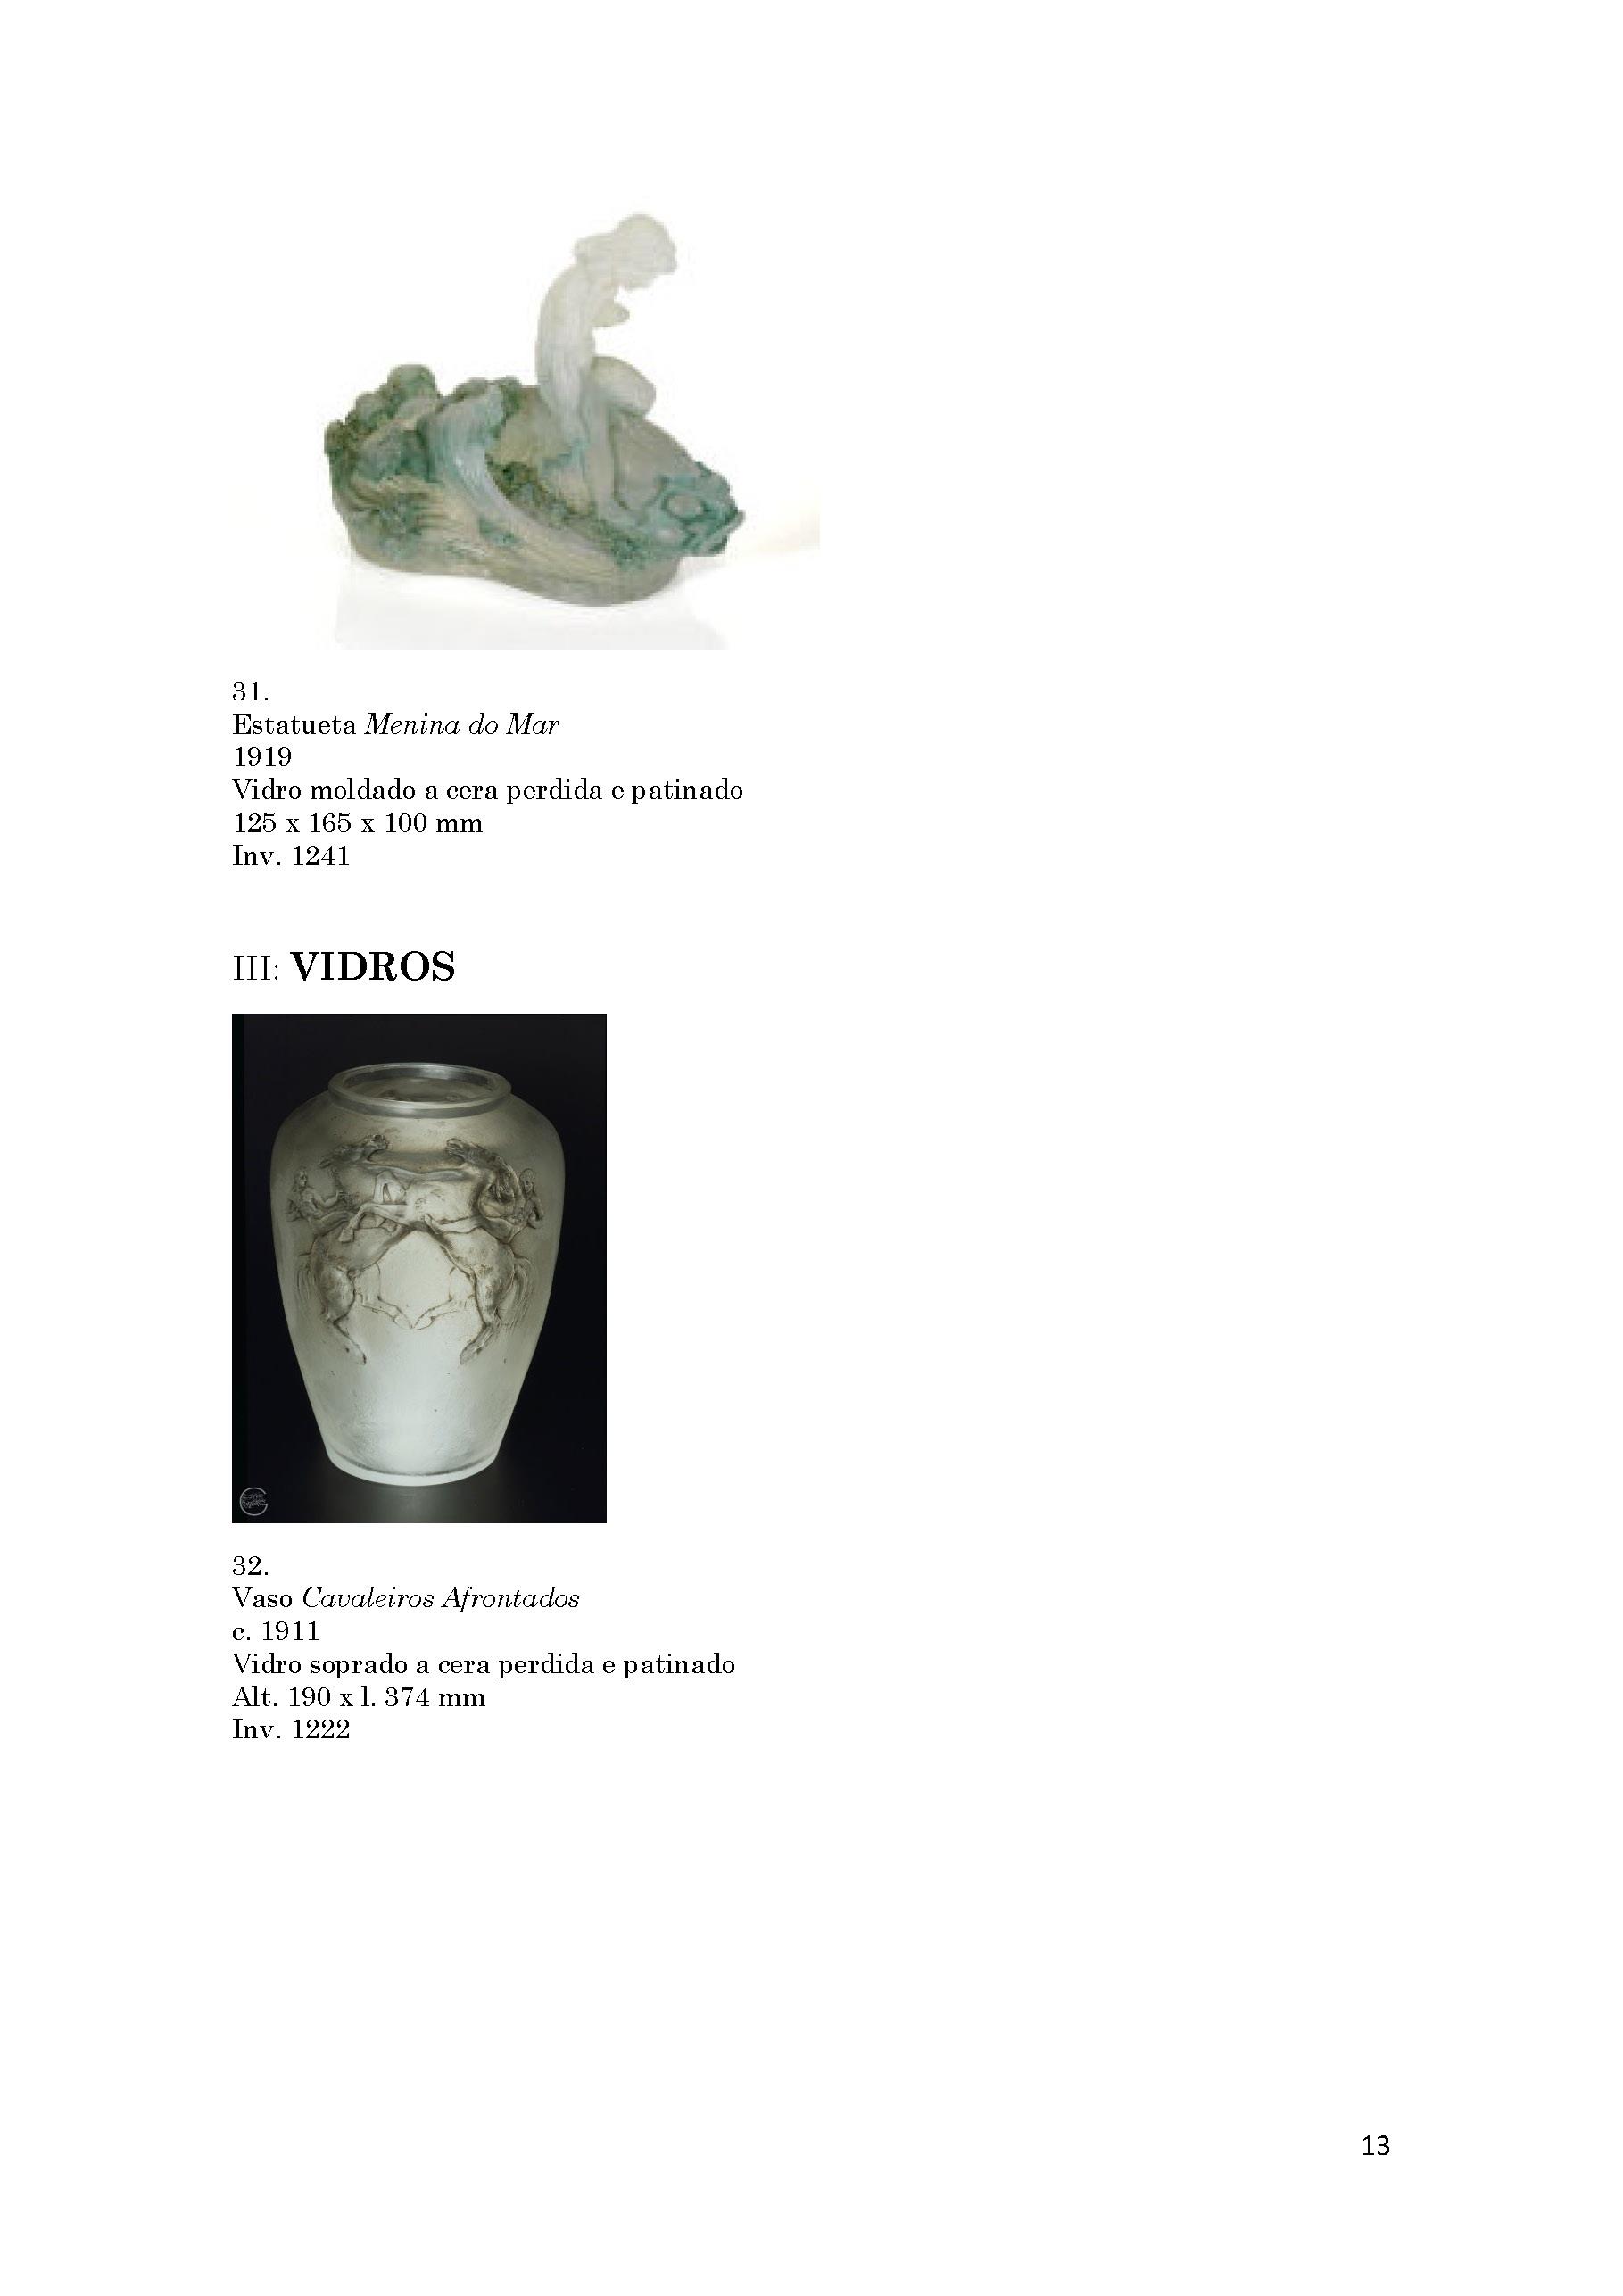 Lista_Vidros_Lalique_25.09.2020_1.13